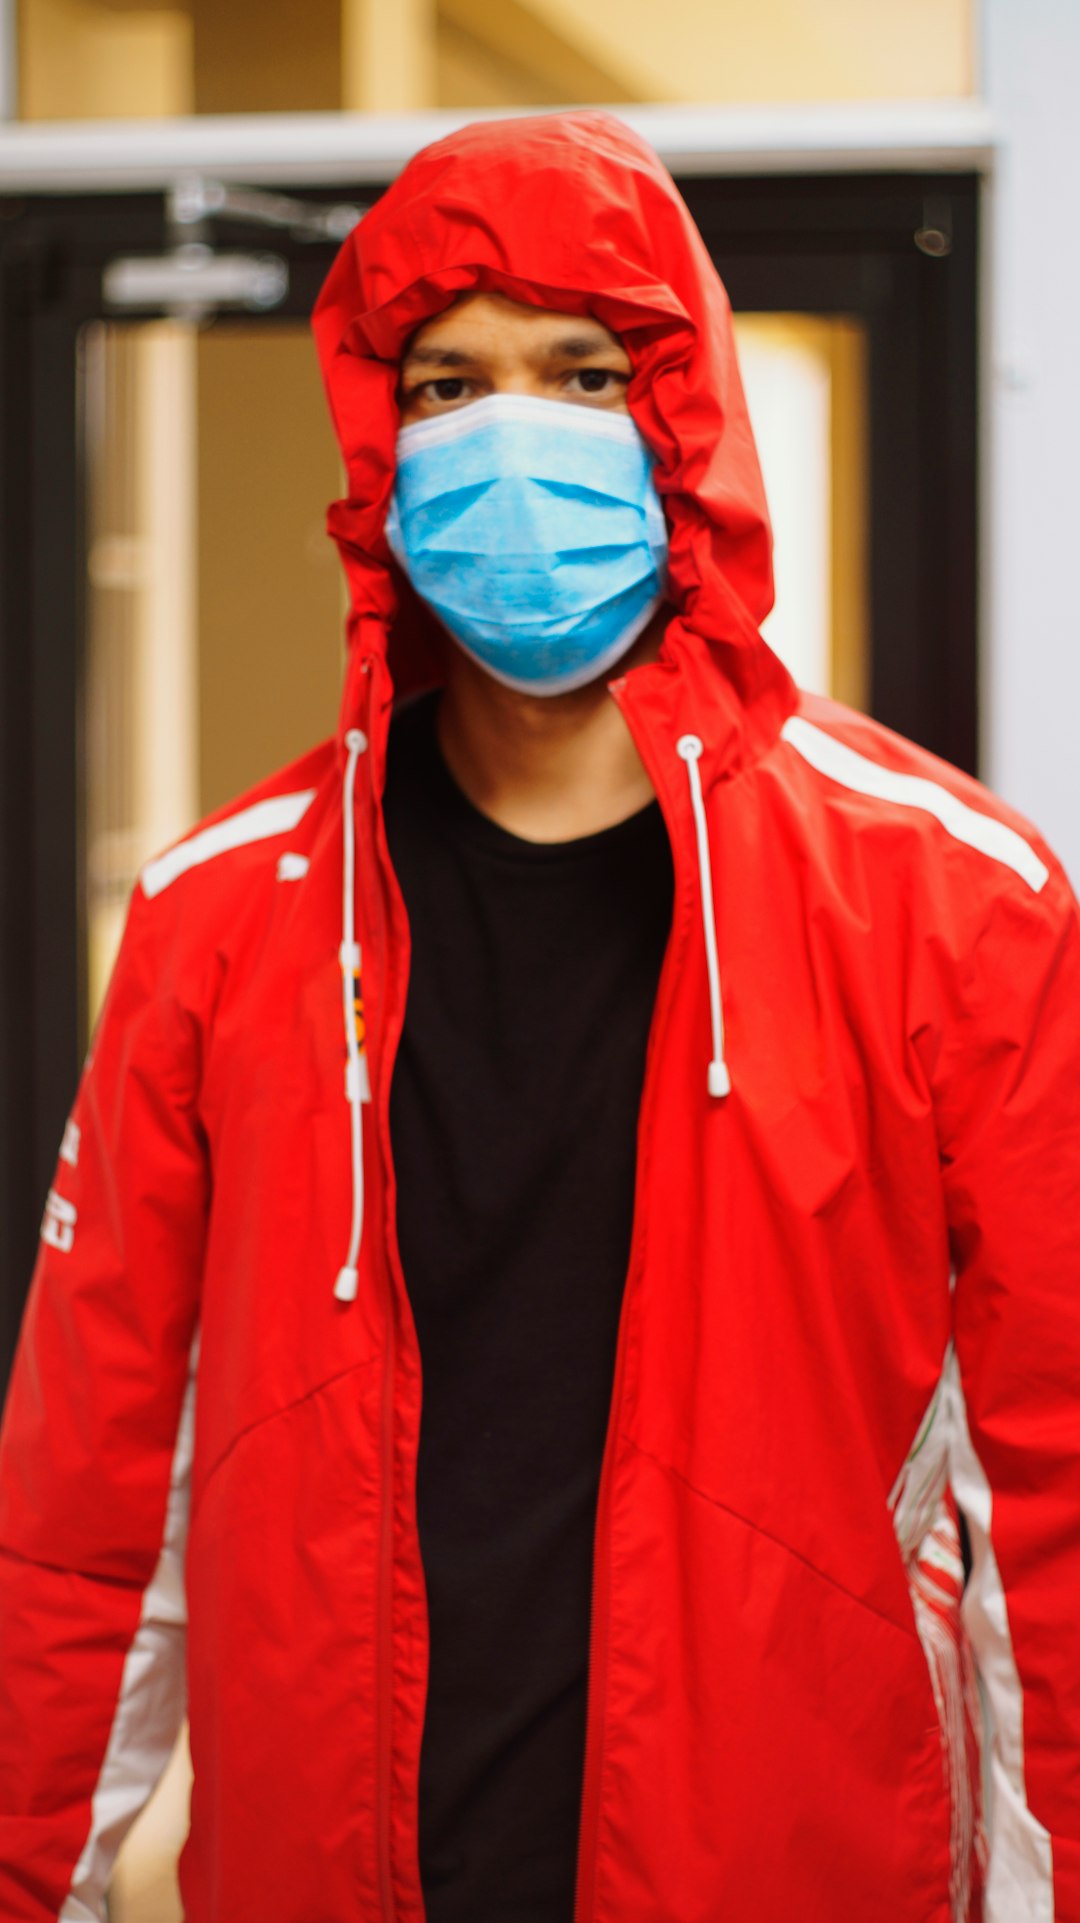 man in red zip up jacket wearing blue mask